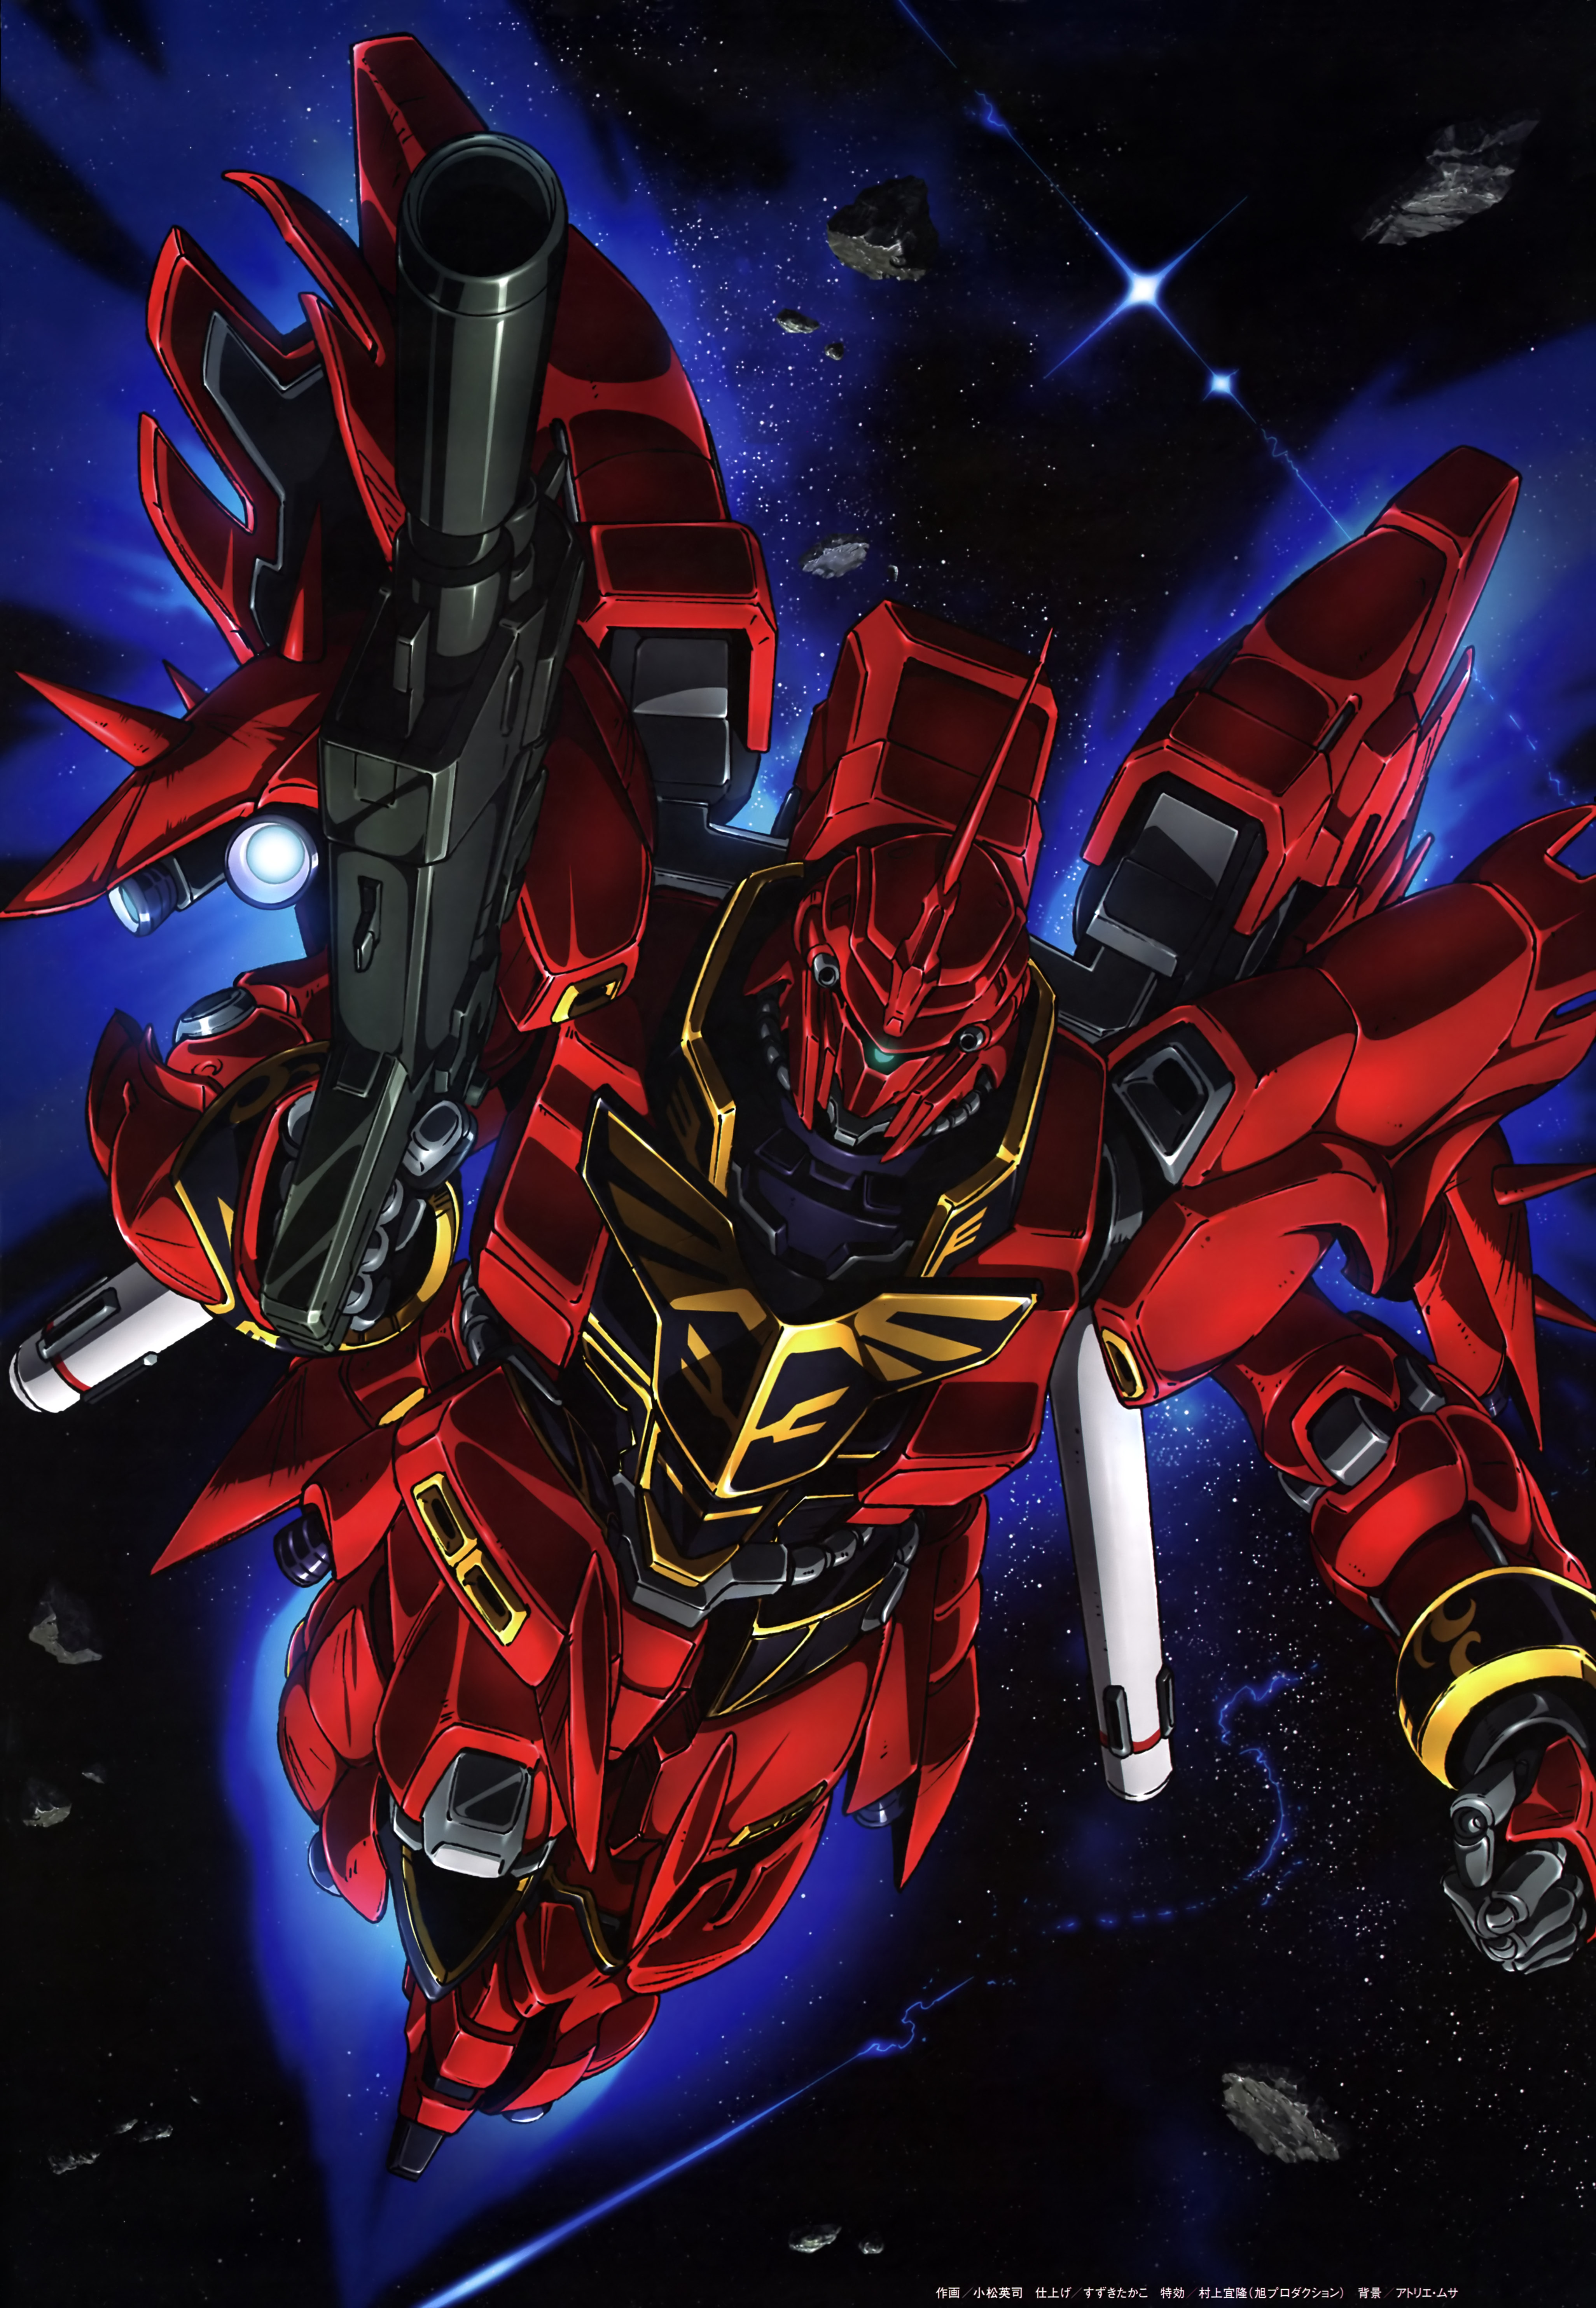 Anime 4105x5936 anime mechs Mobile Suit Gundam Unicorn Sinanju Mobile Suit Super Robot Taisen artwork digital art